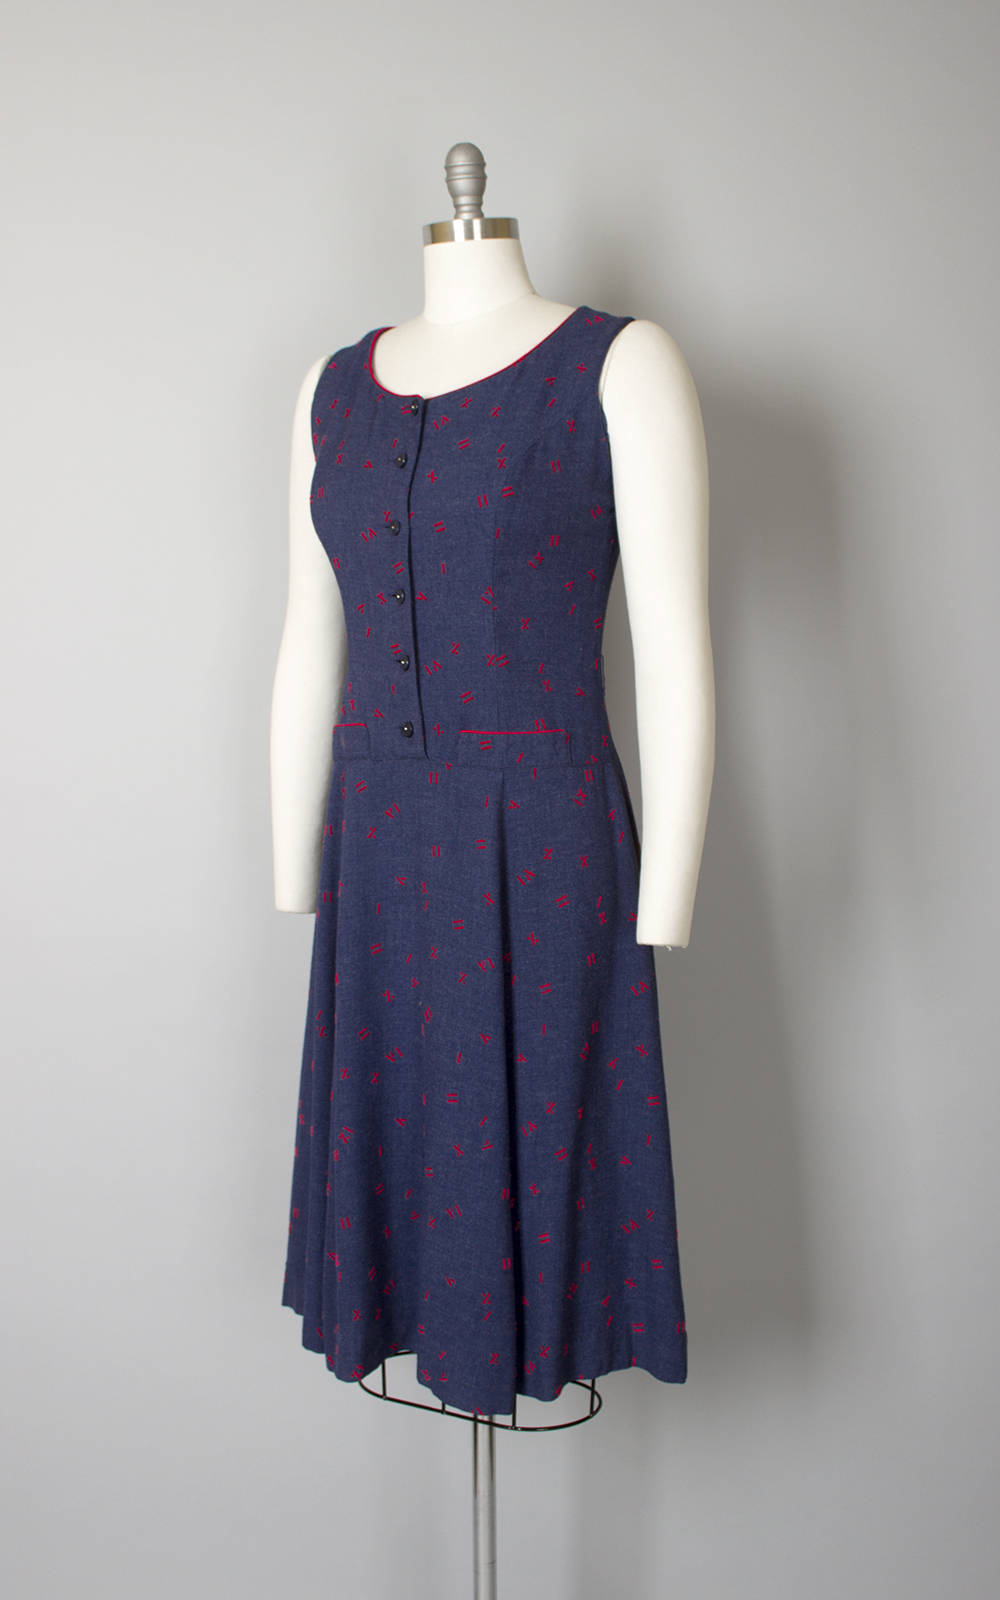 Vintage 1940s Dress | 40s Novelty Print Roman Numerals Cotton Flocked Full Skirt Navy Blue Red Shirtwaist Day Dress (medium)